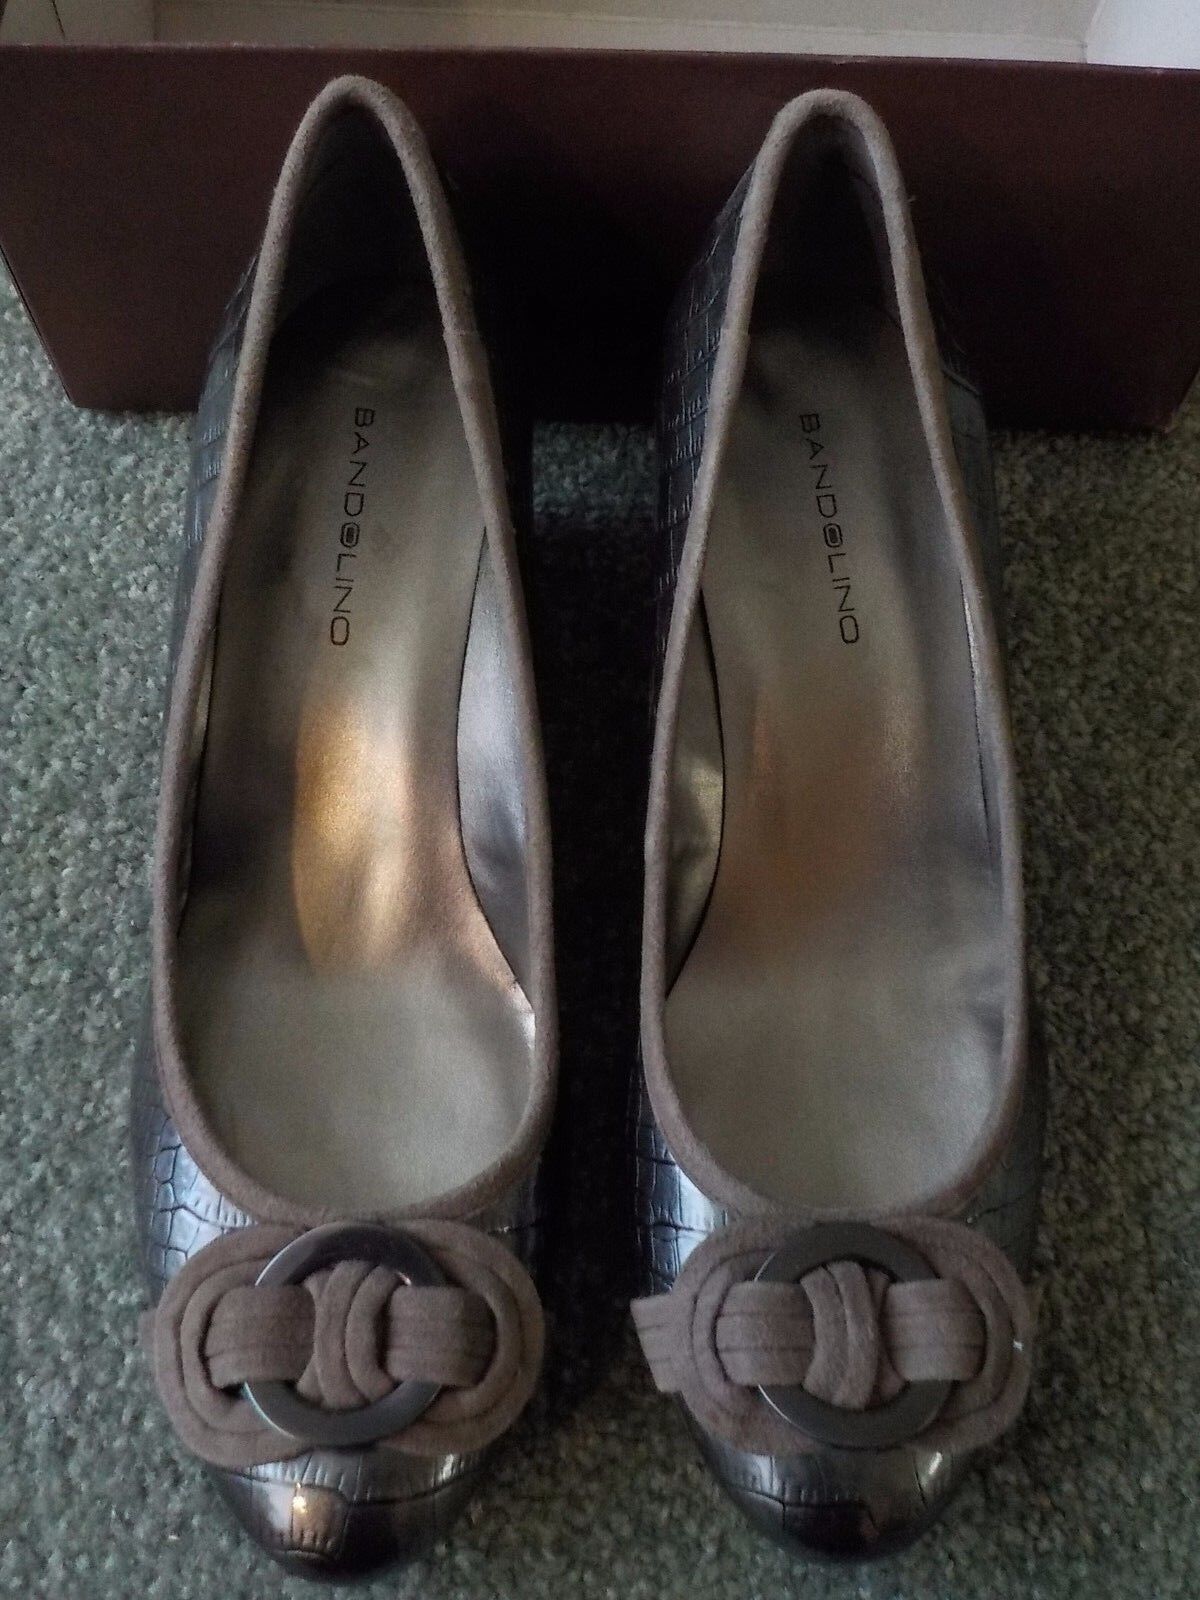 Bandolino Wedge Heel Metallic Shoes, Silvery Gray Snakeskin,  7 1/2 Med., New